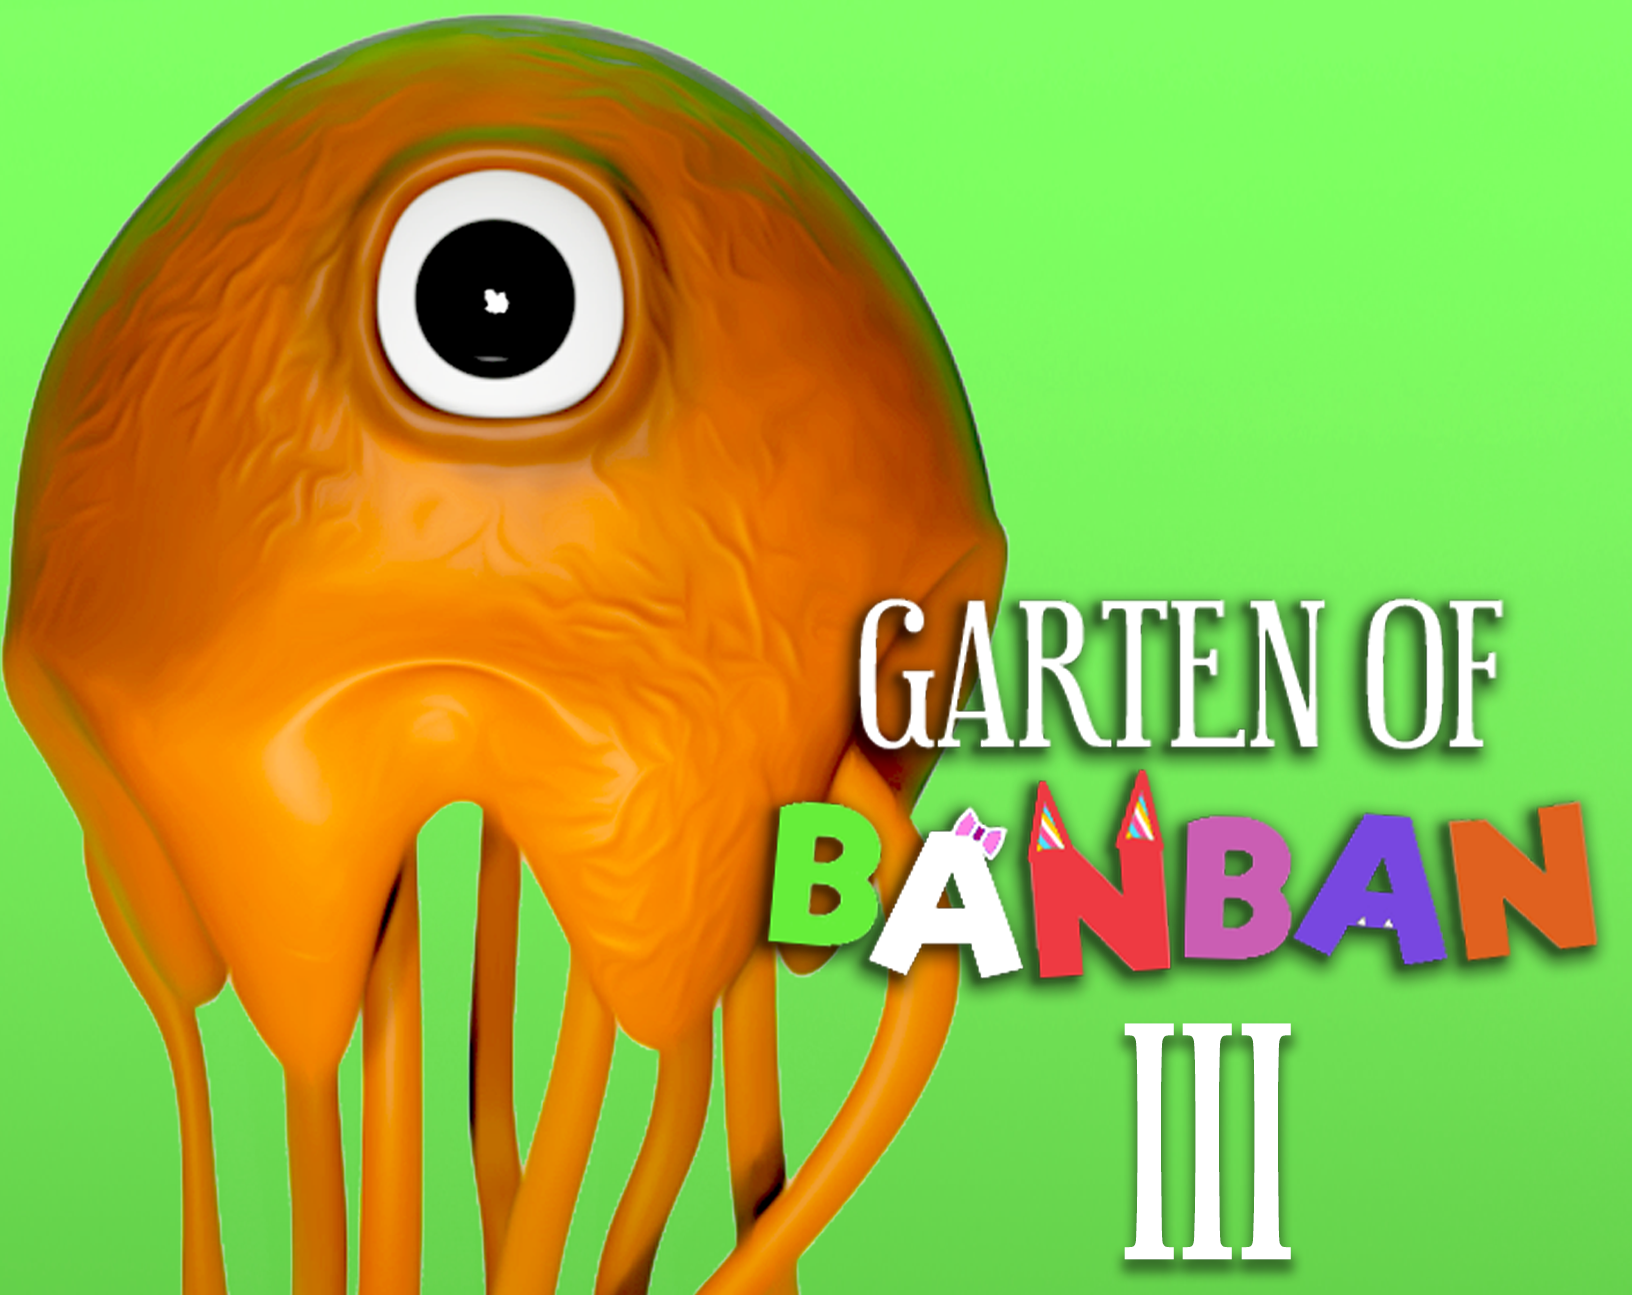 Garten of Banban::Appstore for Android